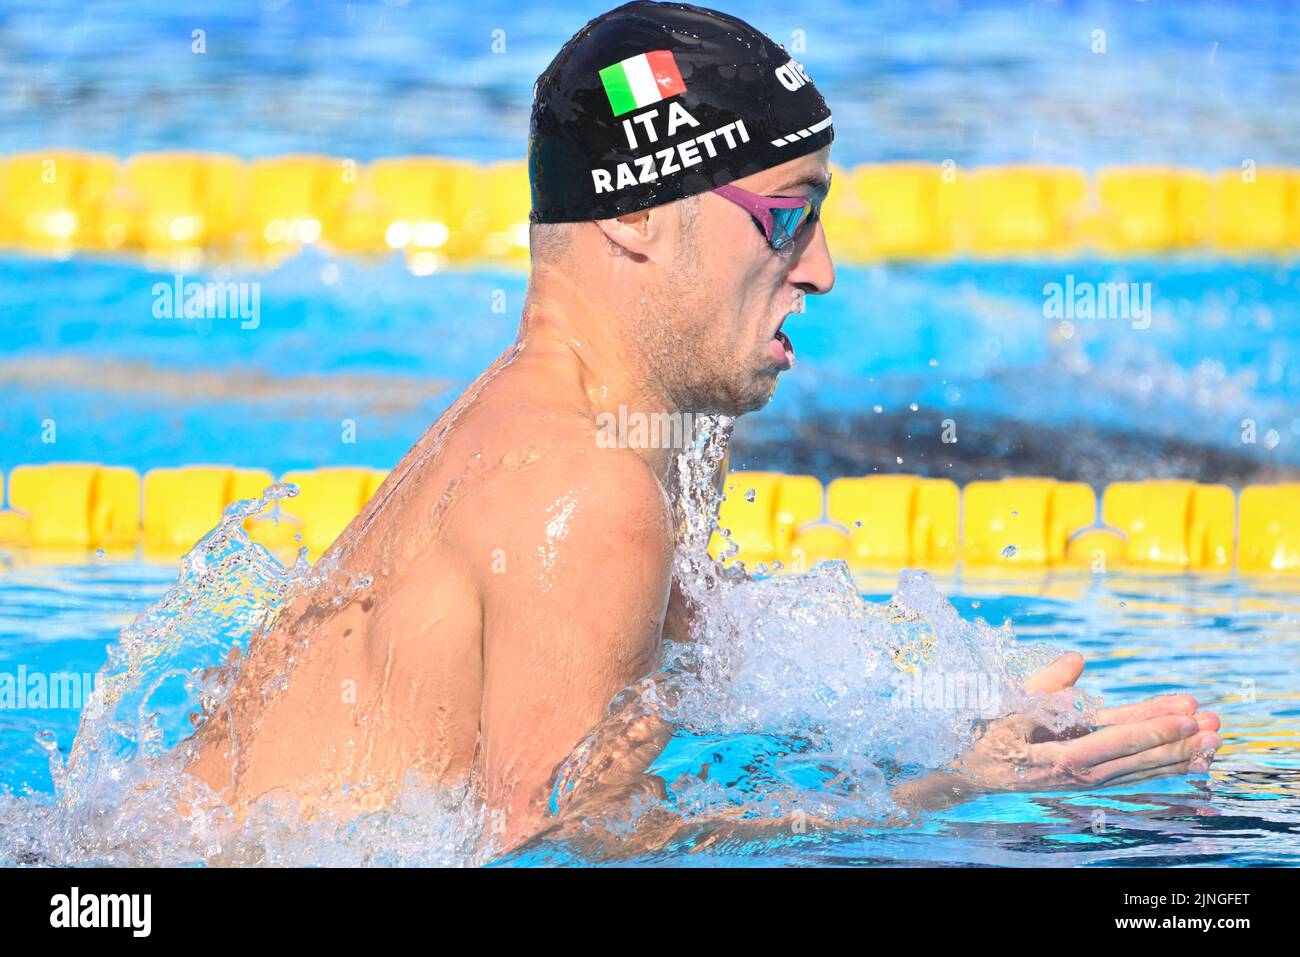 Pier Andrea Matteazzi (ITA) during European Aquatics Championships Rome 2022 at the Foro Italico on 11 August 2022. Stock Photo